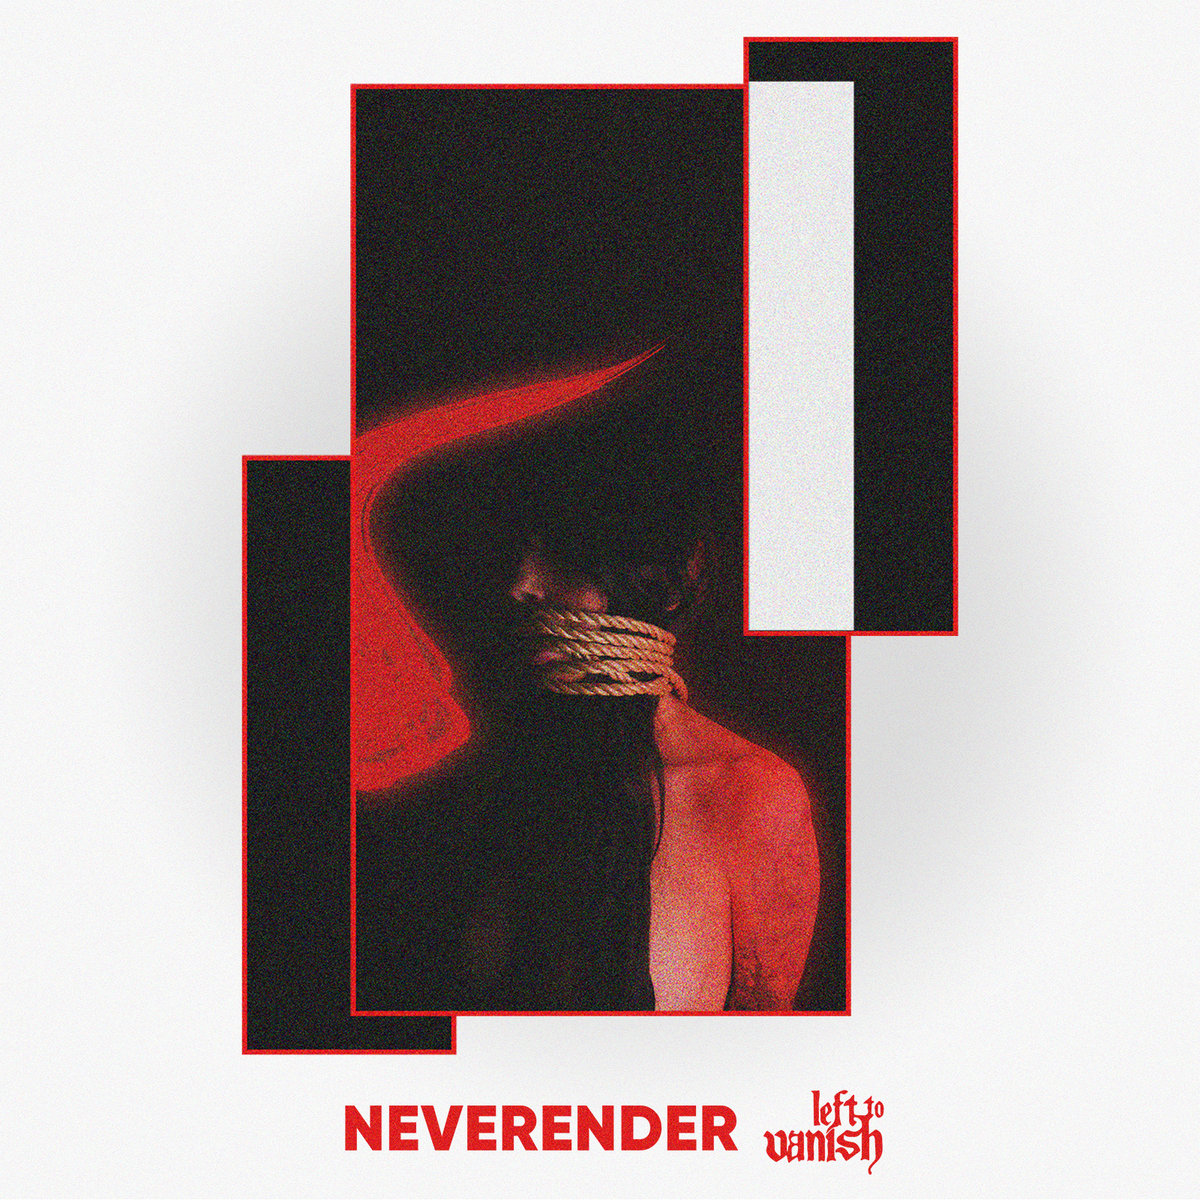 Left to Vanish - "Neverender" EP - 2023